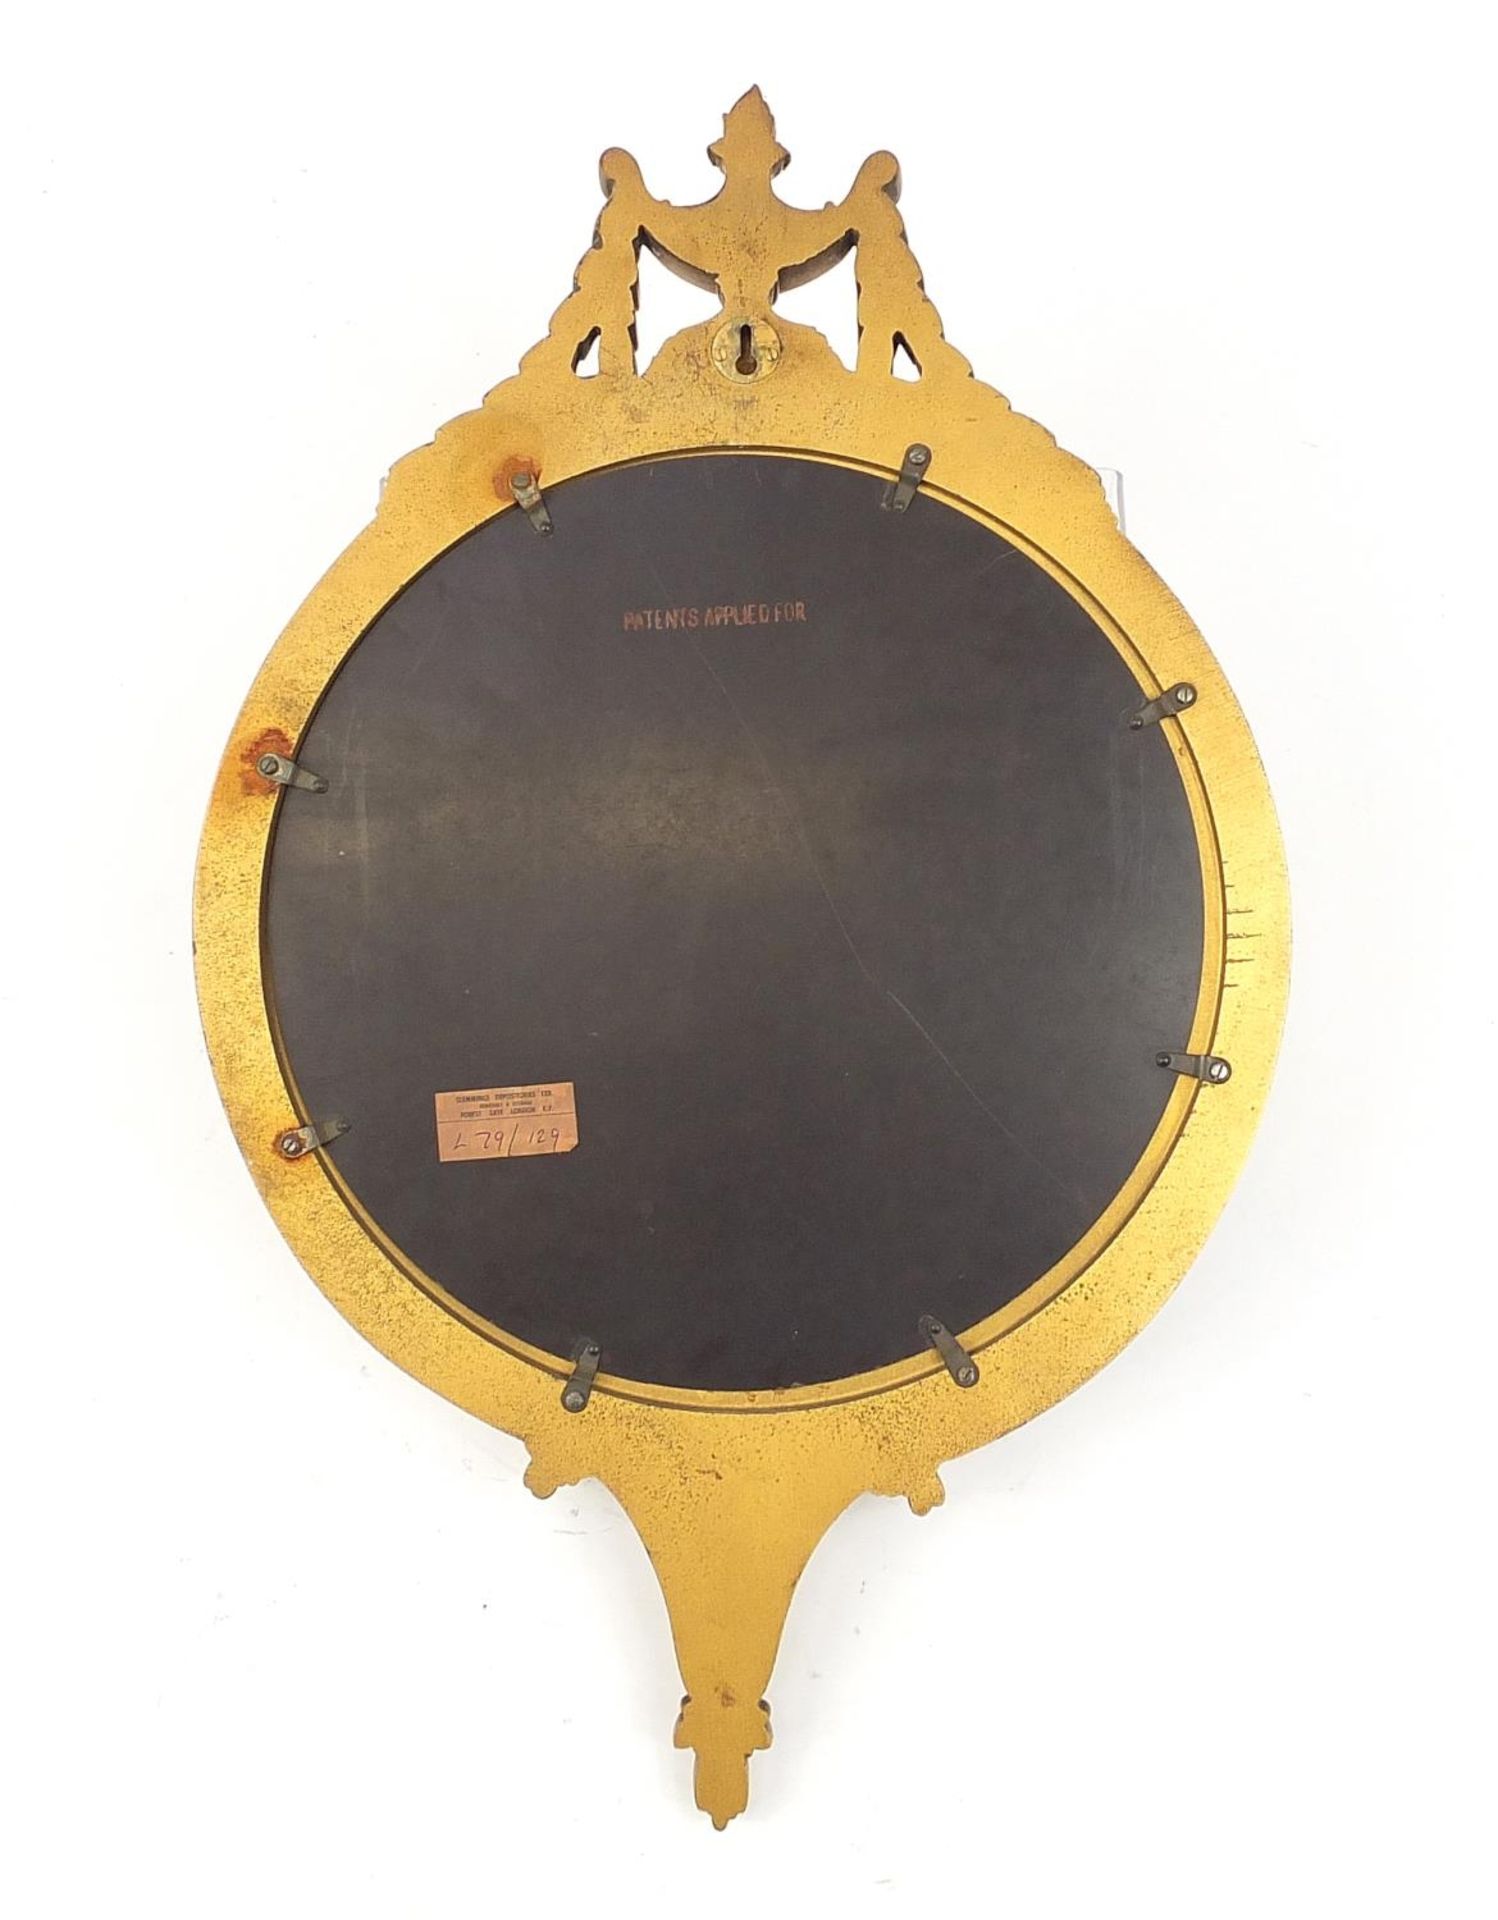 Ornate gilt framed convex mirror with urn, 65.5cm high - Image 3 of 5